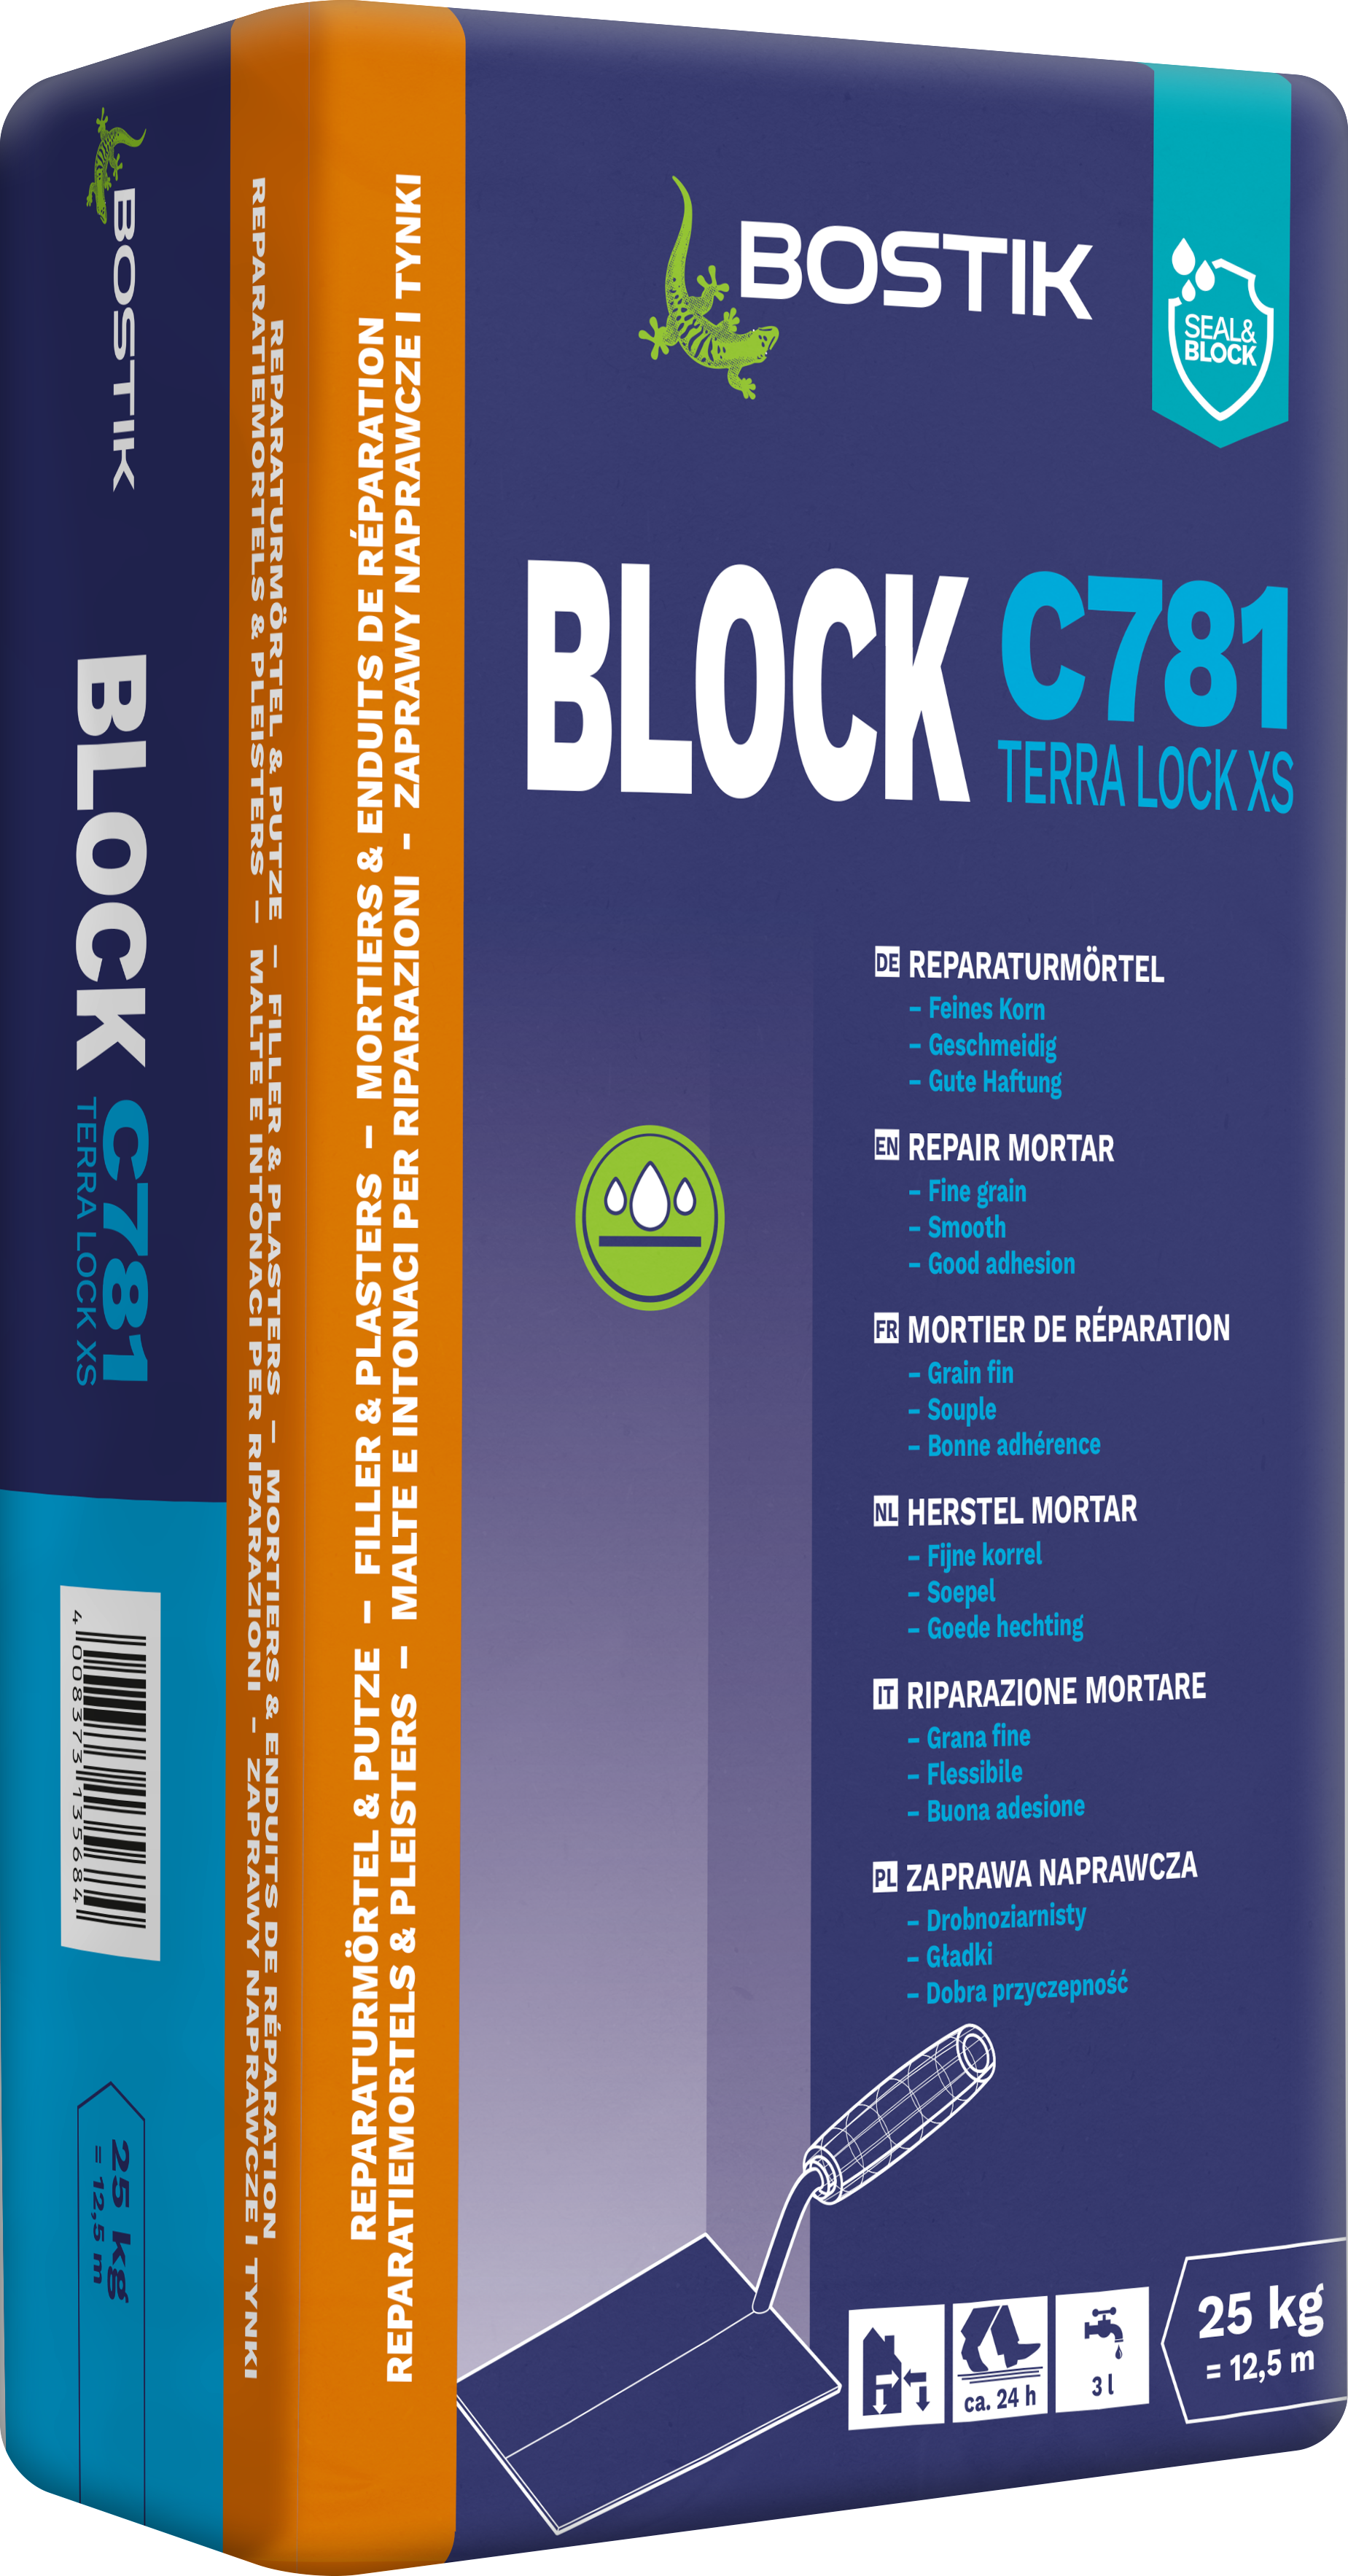 BOSTIK BLOCK C781 TERRA LOCK XS  (dawne Sperrmörtel Fein)